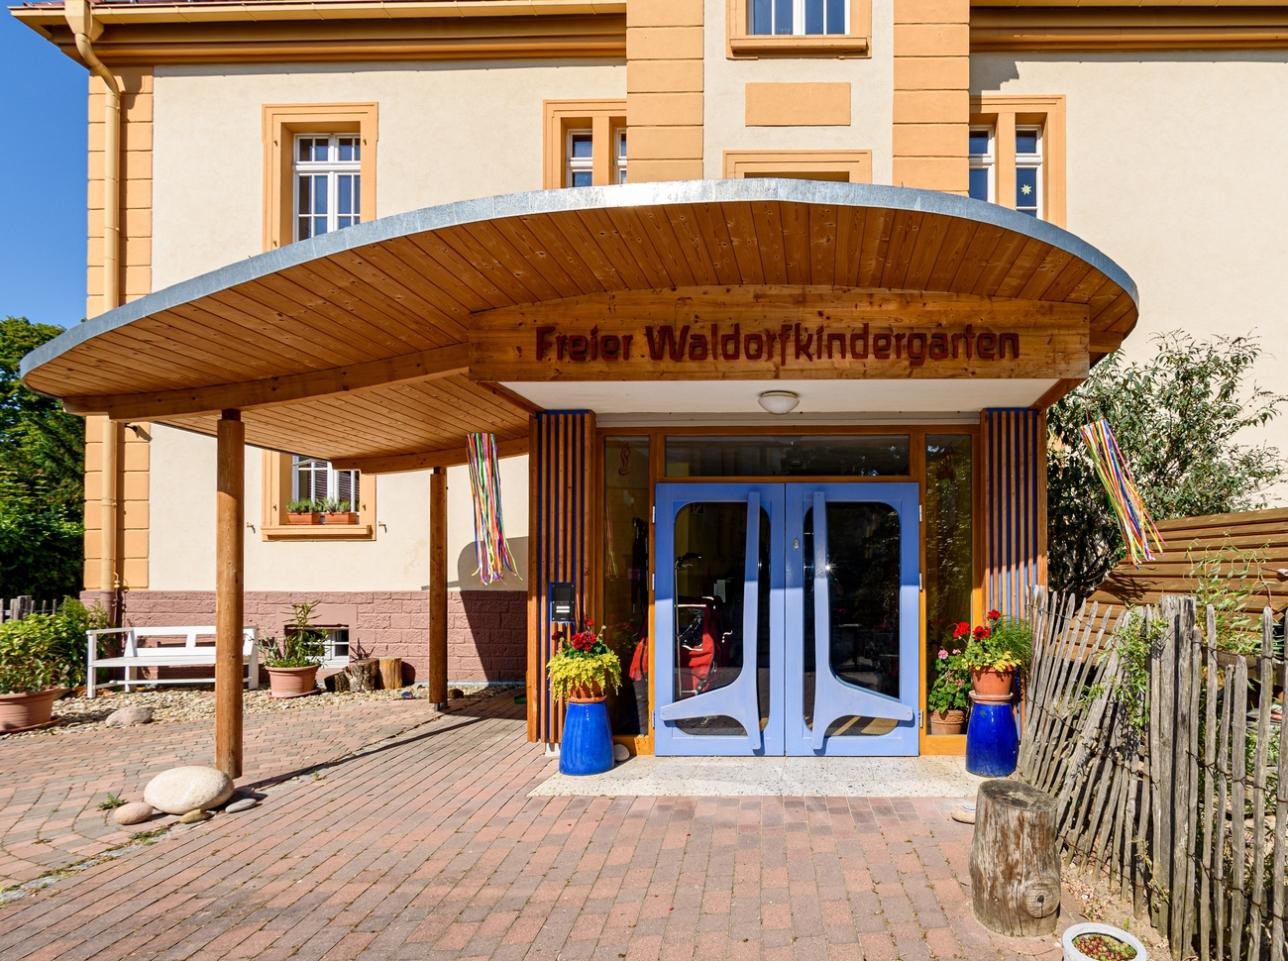 Entrée du jardin d'enfants Waldorf de Rastatt